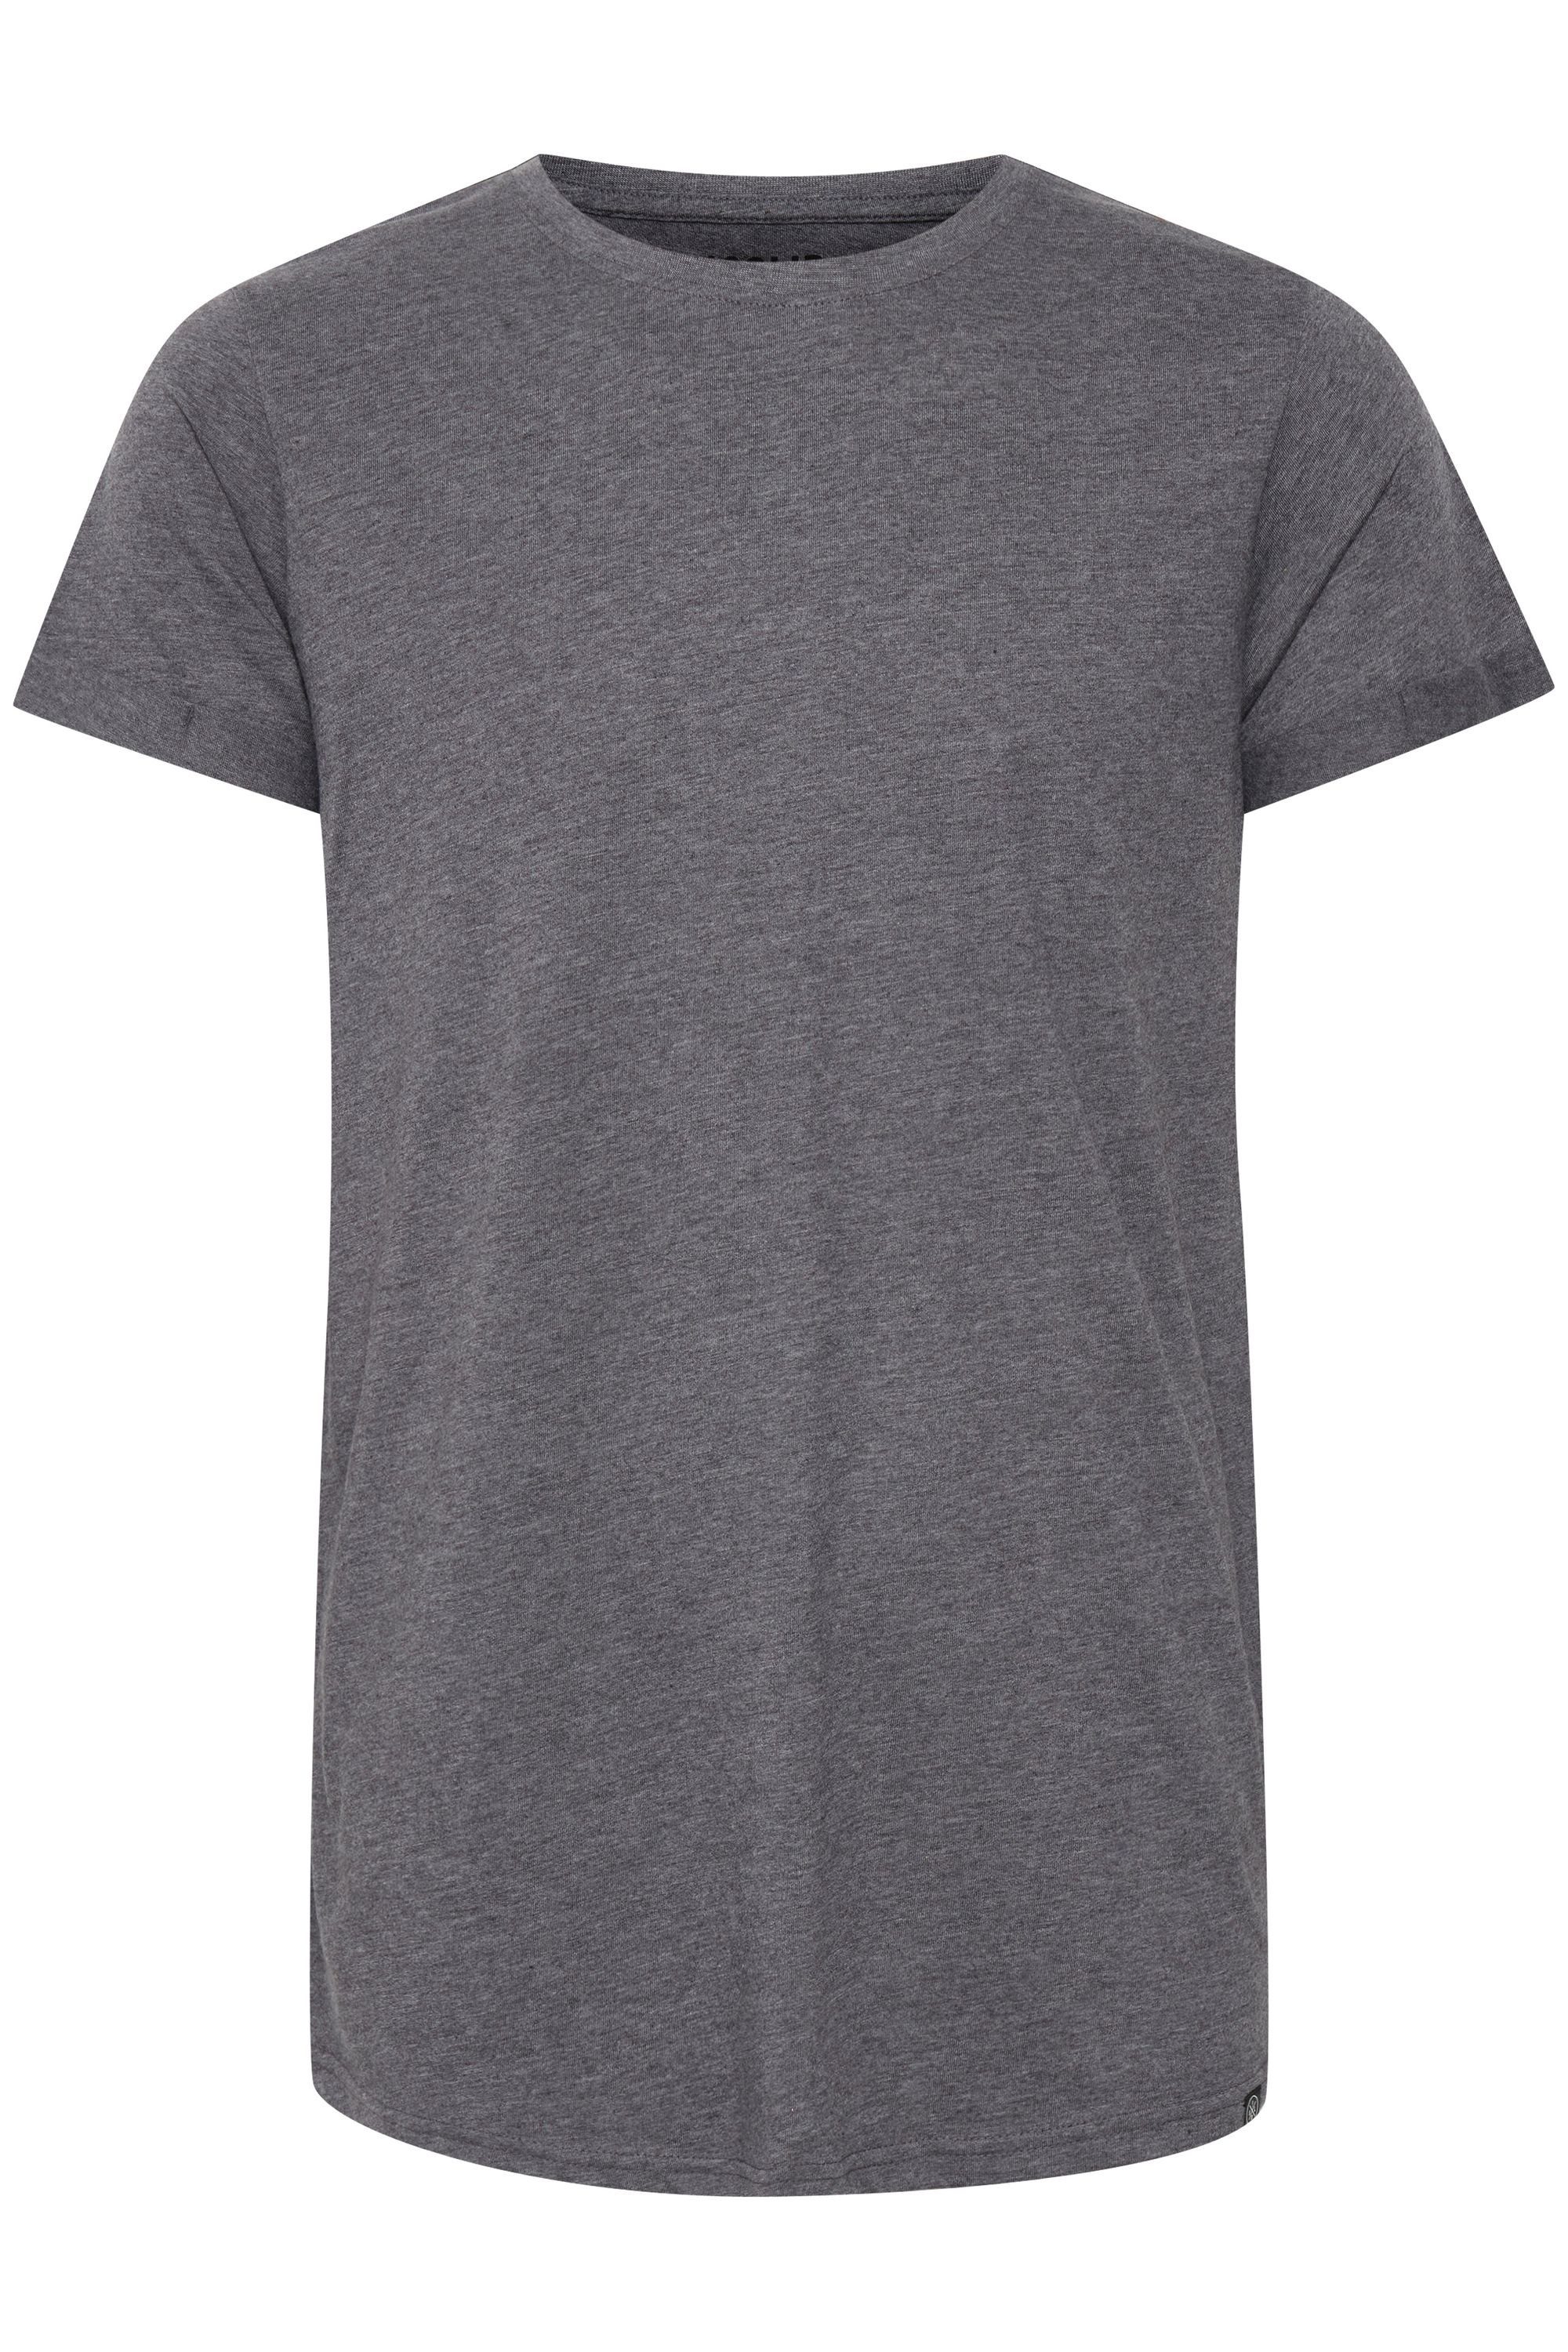 !Solid Longshirt SDLongo T-Shirt Grey Melange (8236)